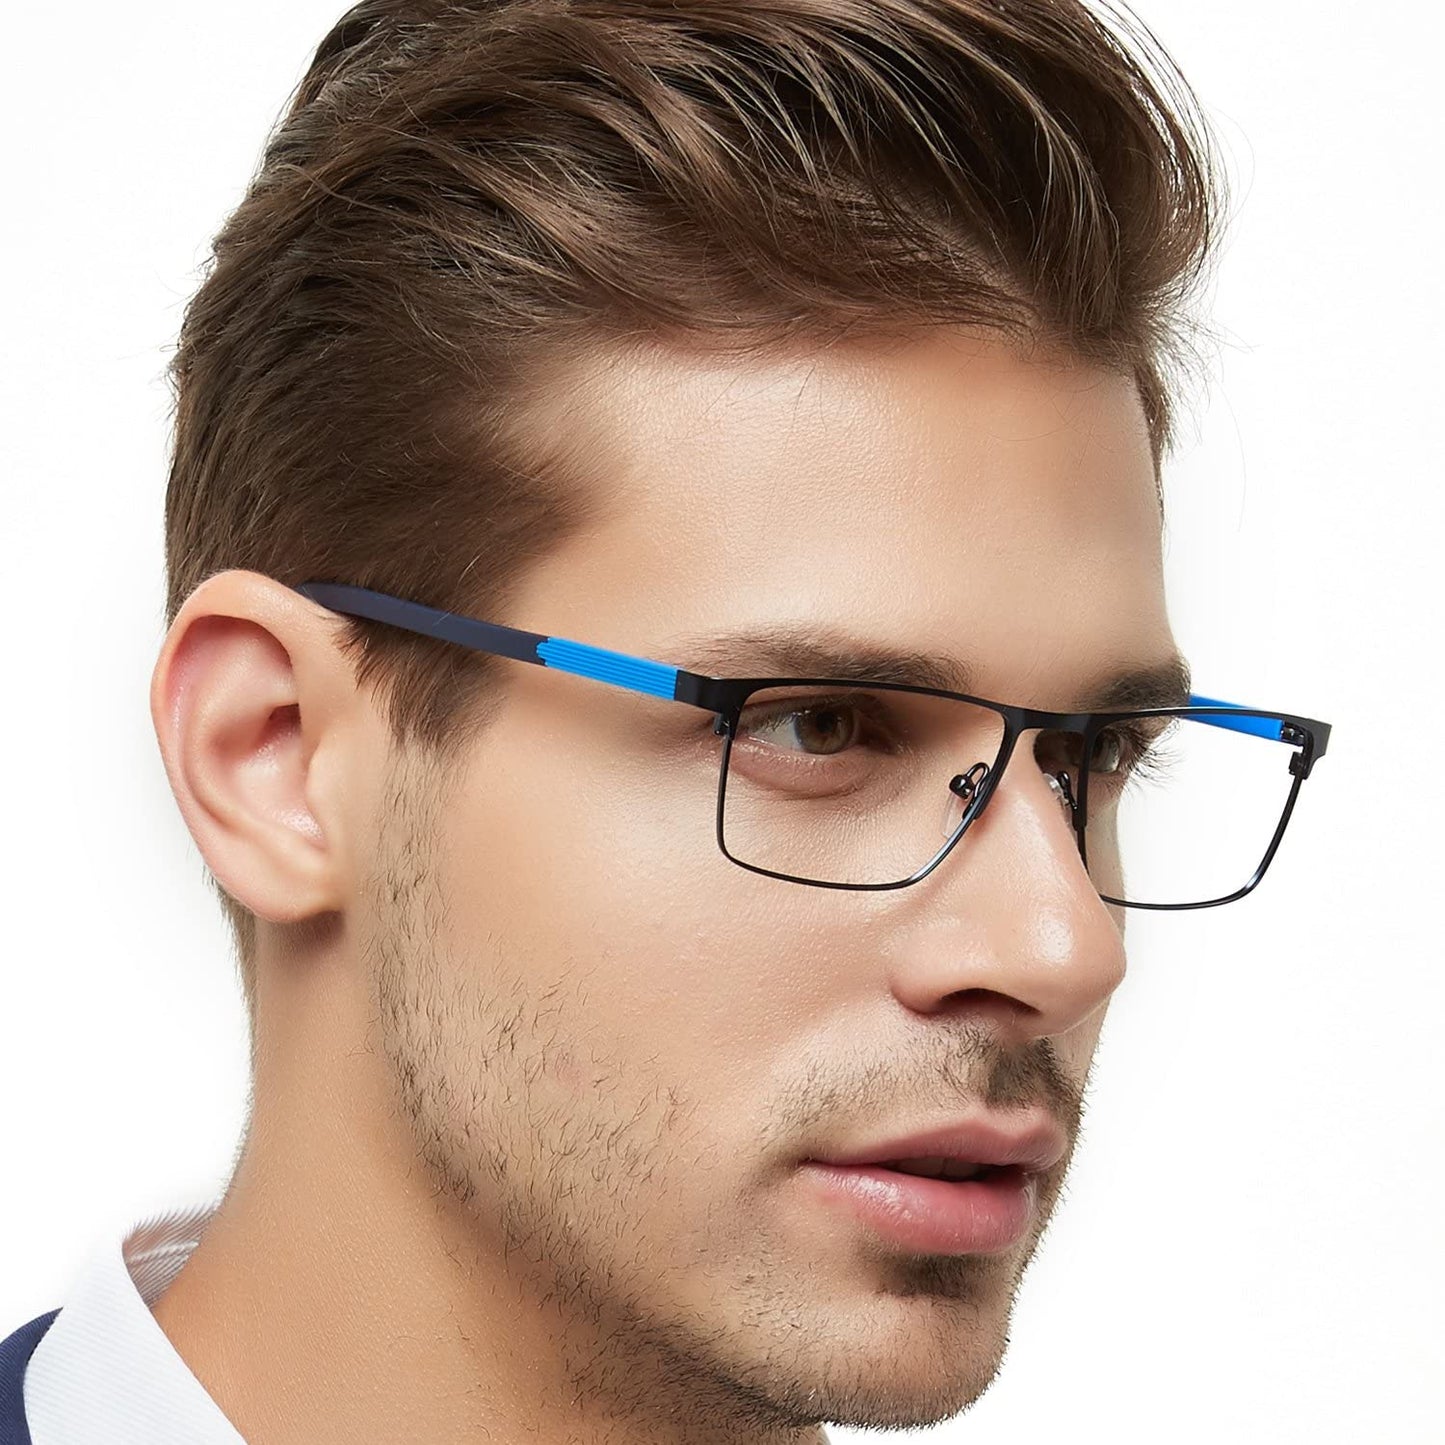 OCCI CHIARI Mens Rectangle Full-Rim Metal Black Prescription Clear Optical Glasses